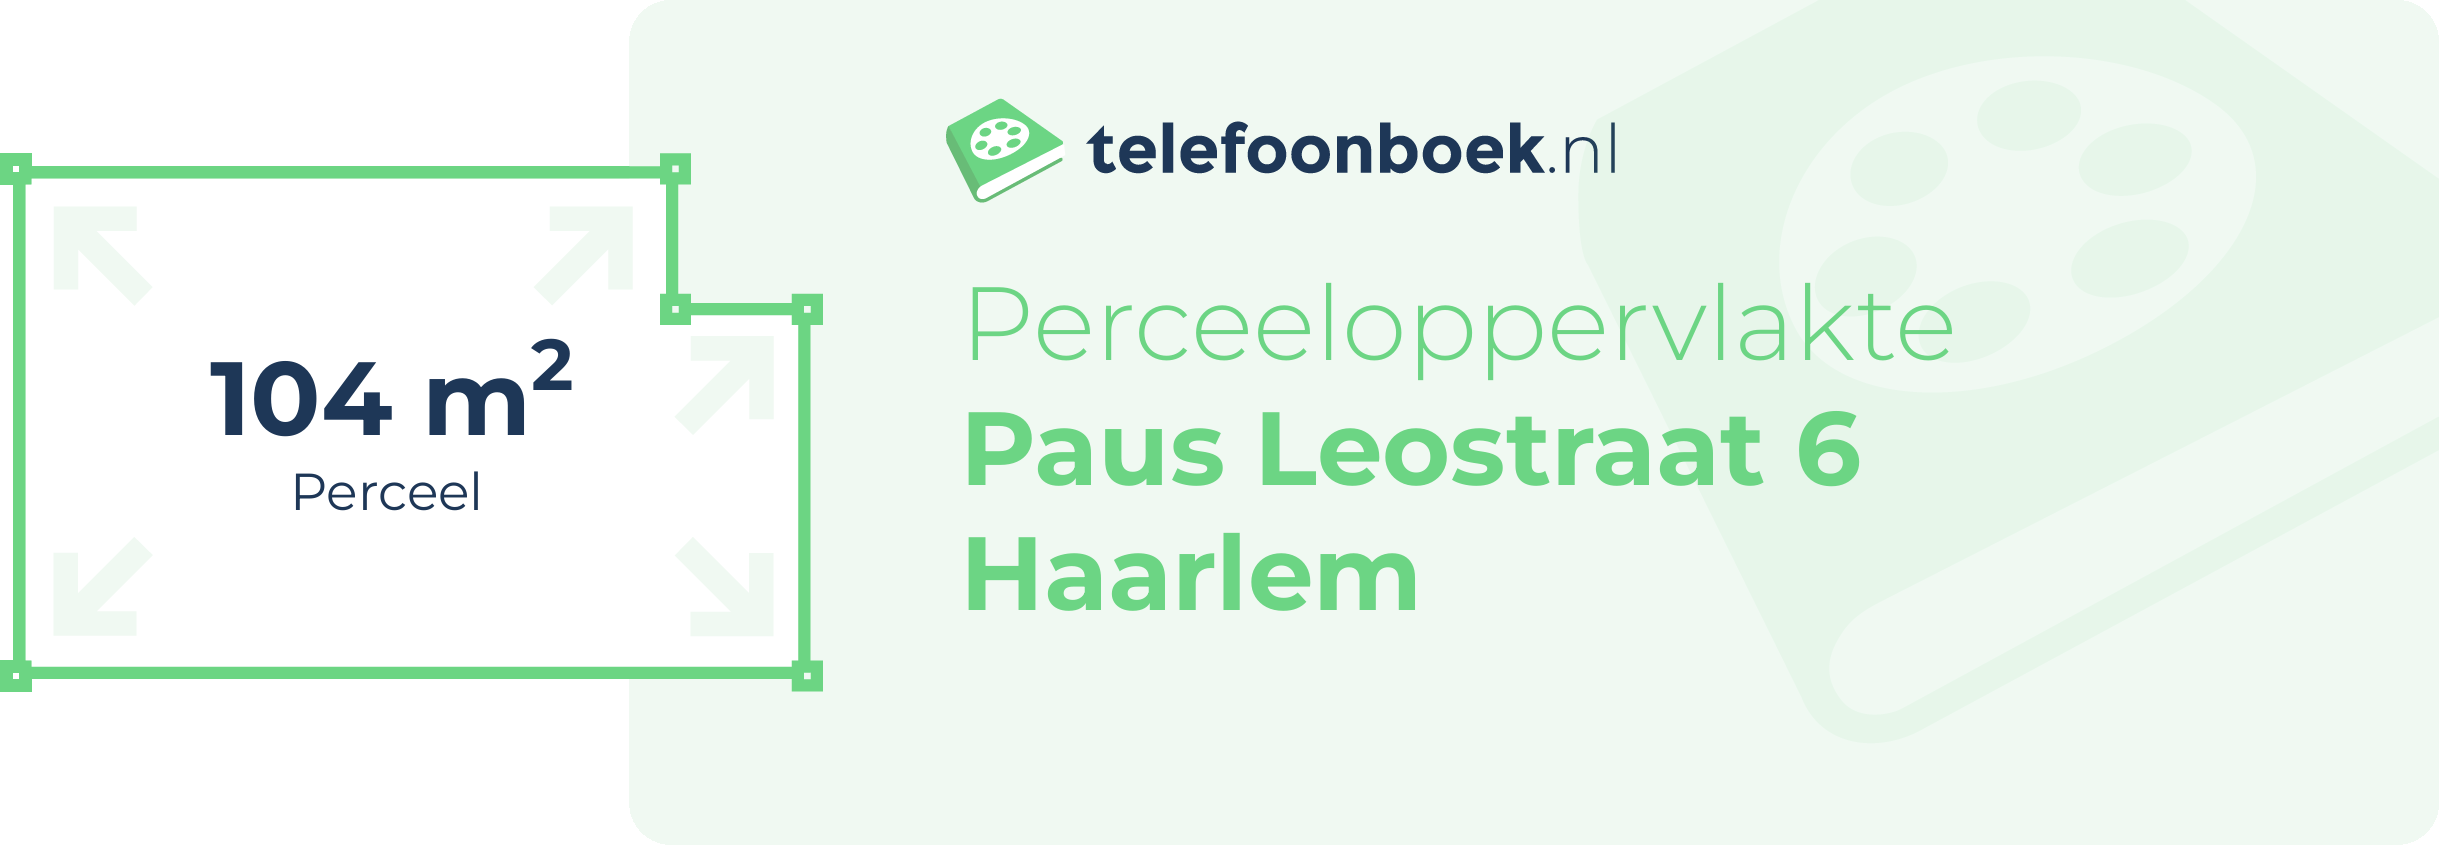 Perceeloppervlakte Paus Leostraat 6 Haarlem